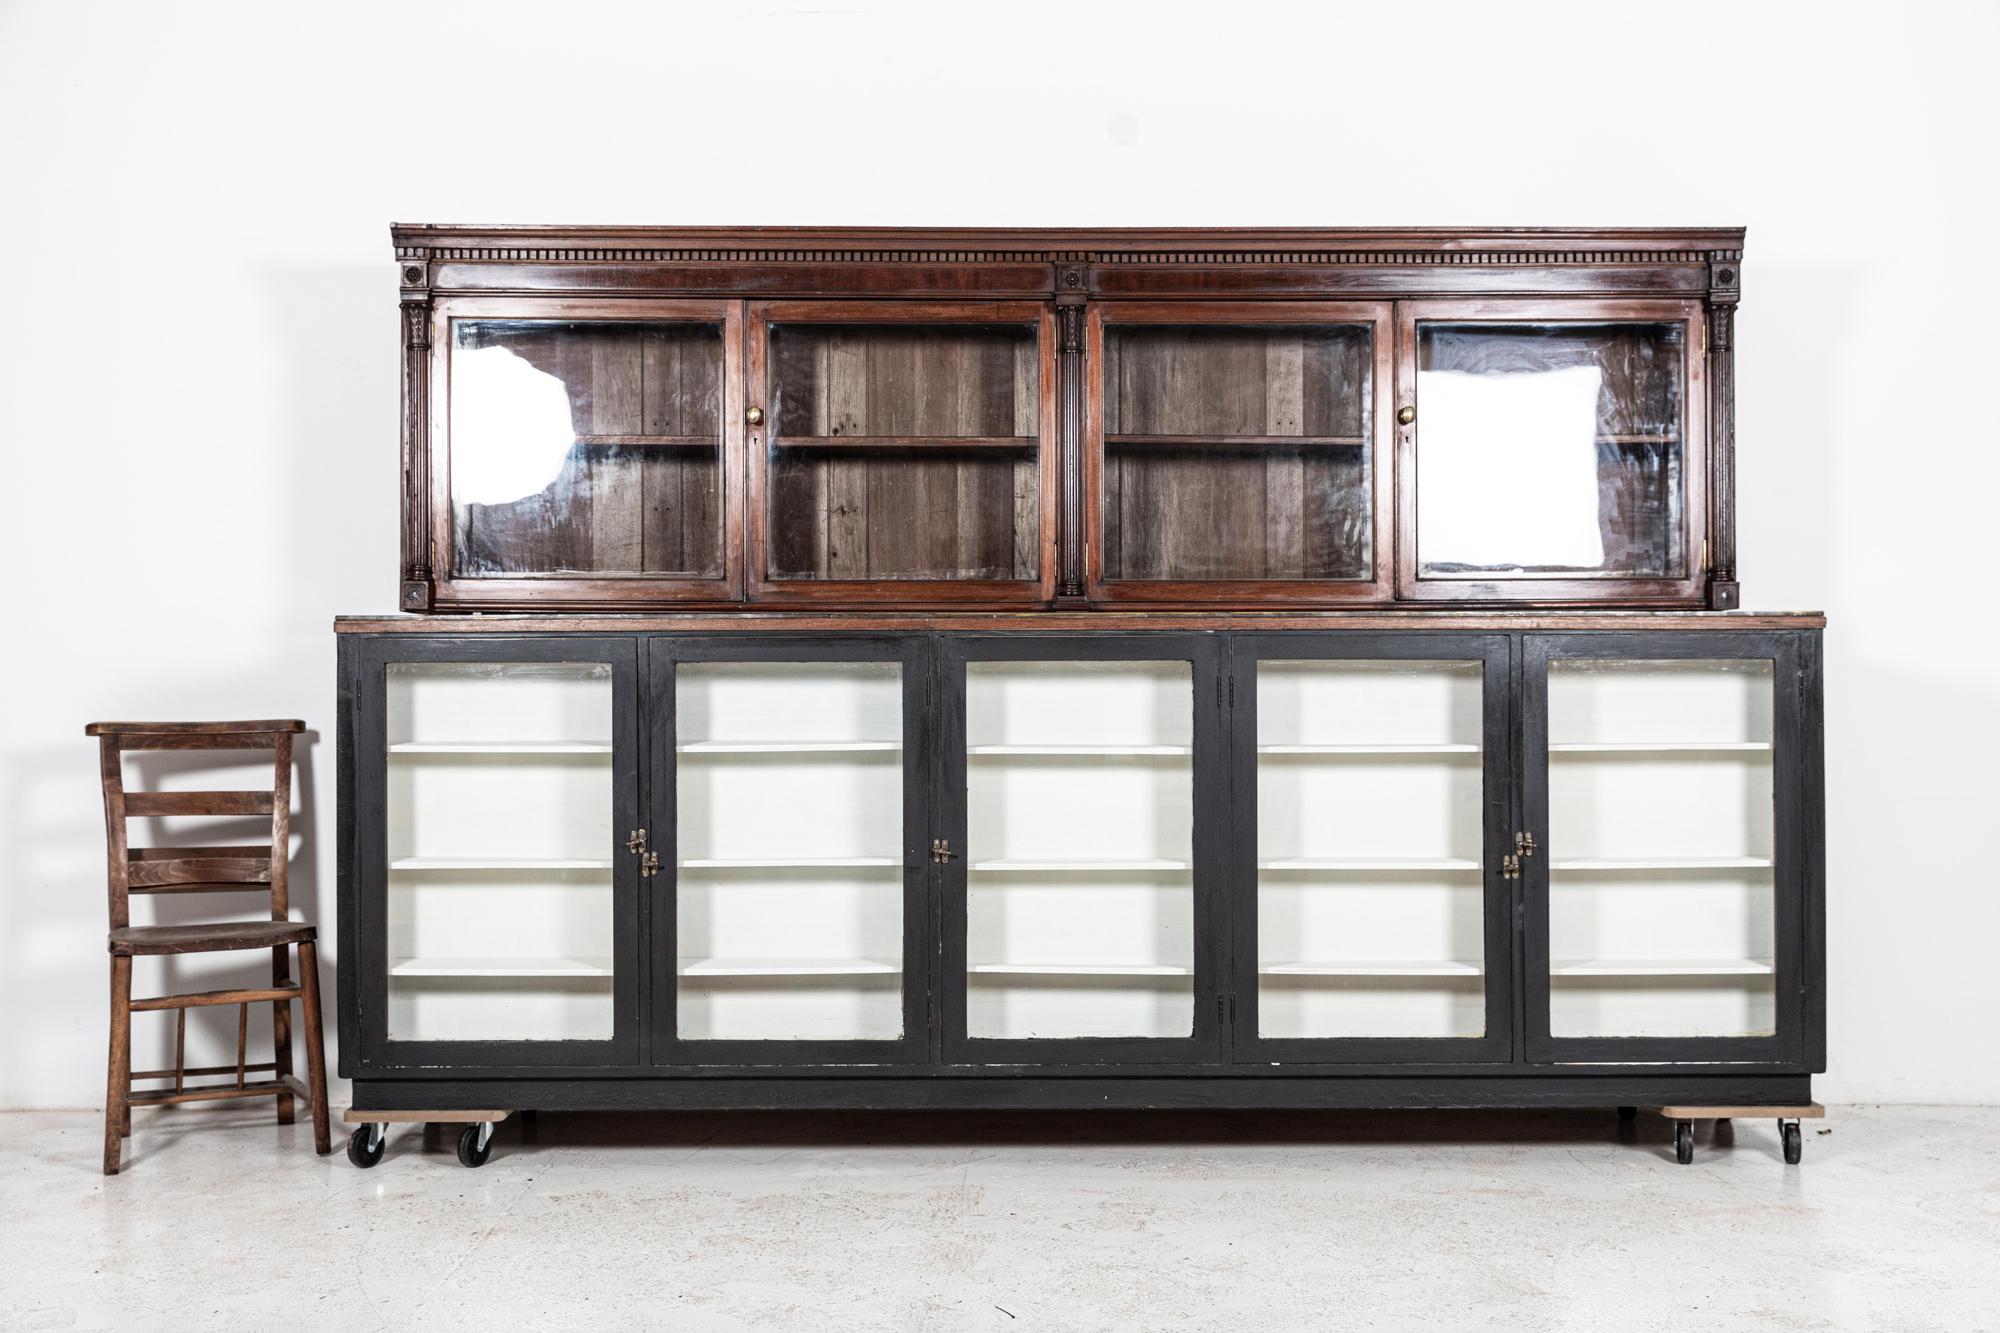 Circa 1870

Large 19th C English mahogany glazed apothecary wall cabinet

sku 577

Measures: W262 x D34 x H75 cm.